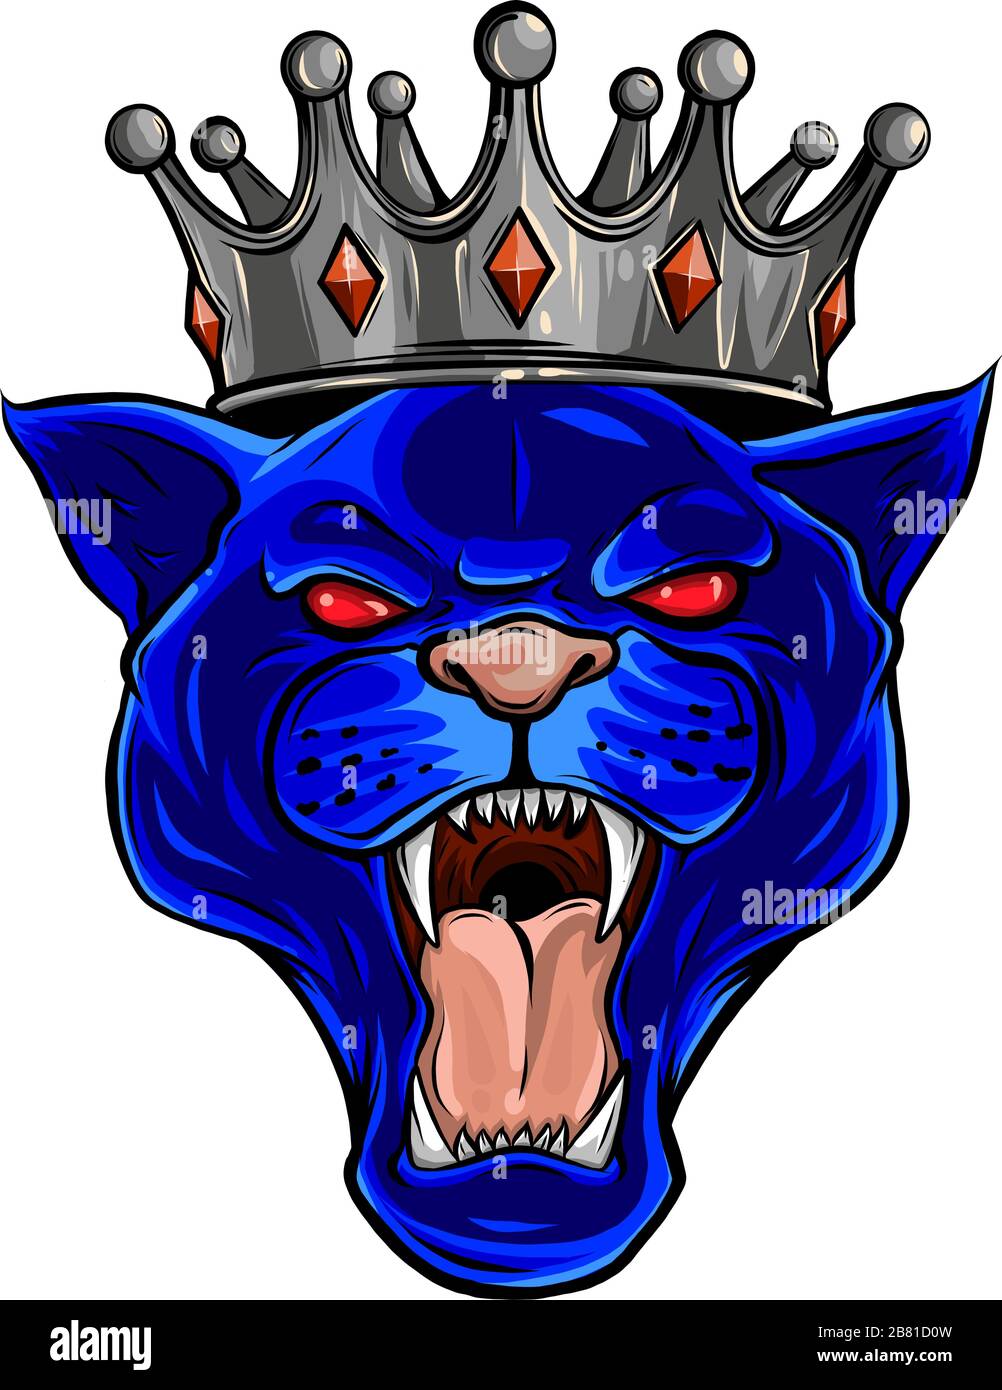 Grafik mit Mascot Head Vector Illustration von Coutgar Panther Stock Vektor